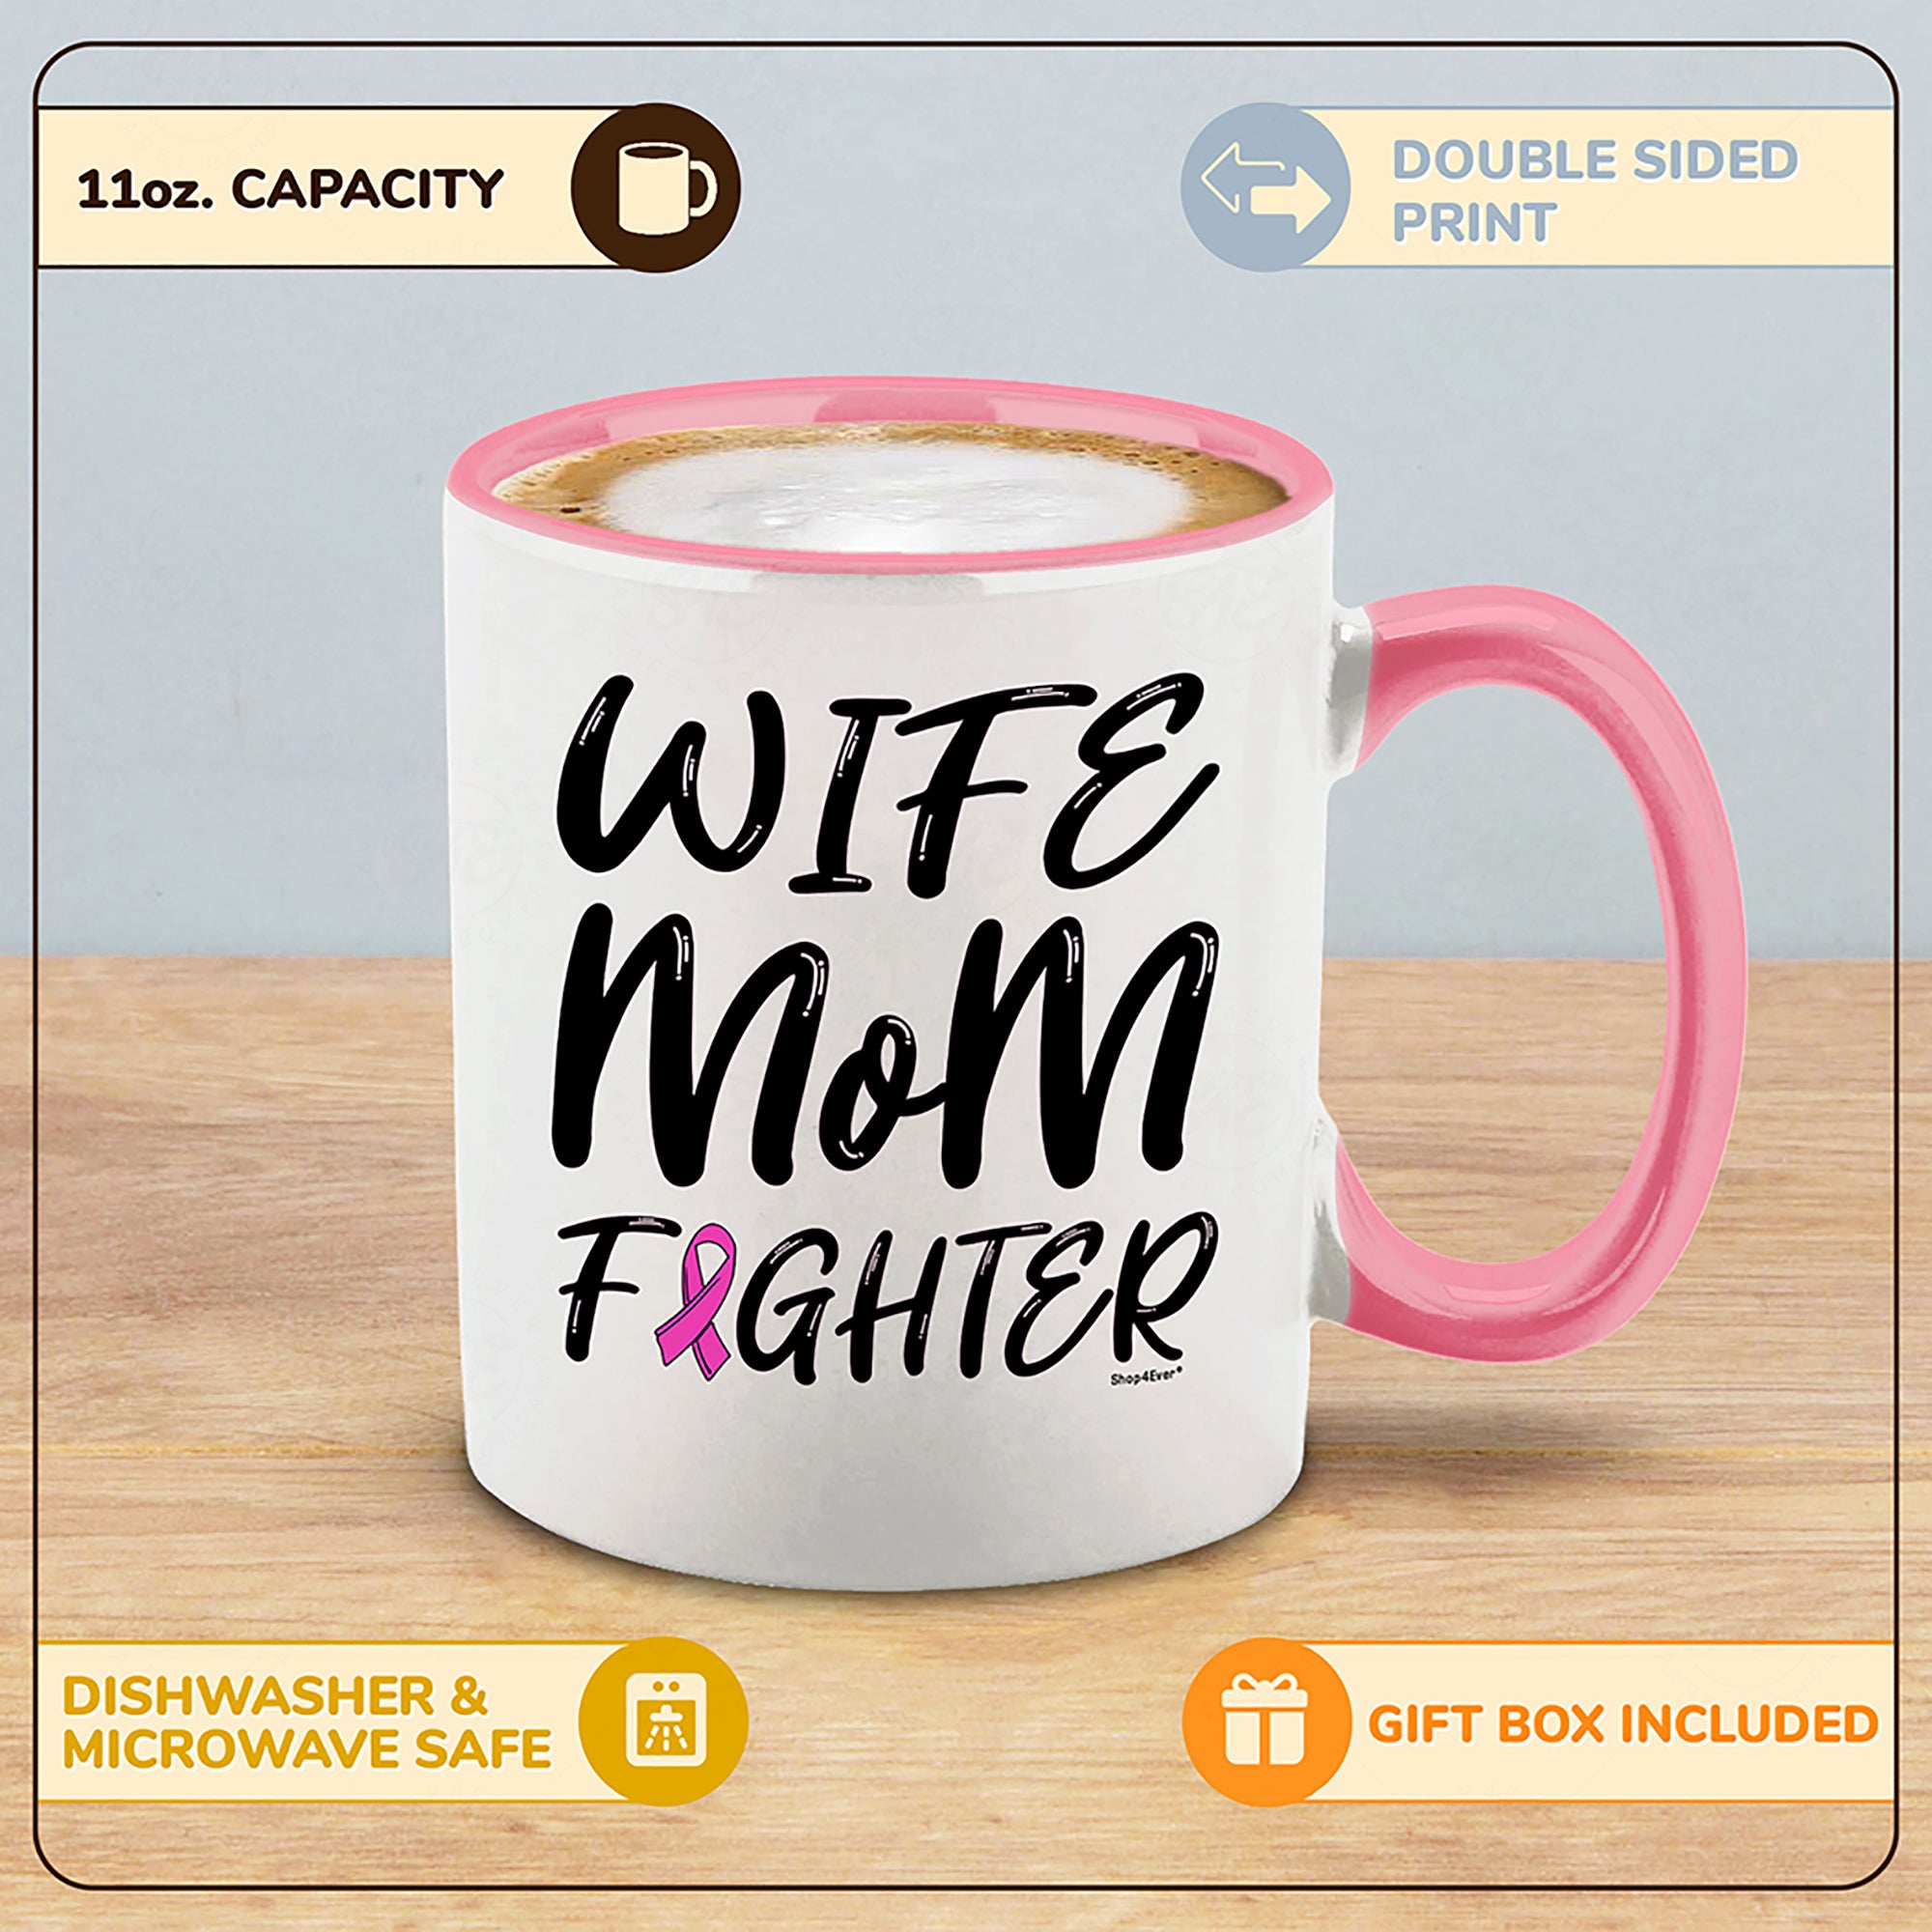 Wife Mom Fighter Pink Handle Ceramic Coffee Mug Tea Cup Pink Ribbon Breast Cancer Survivor Awareness